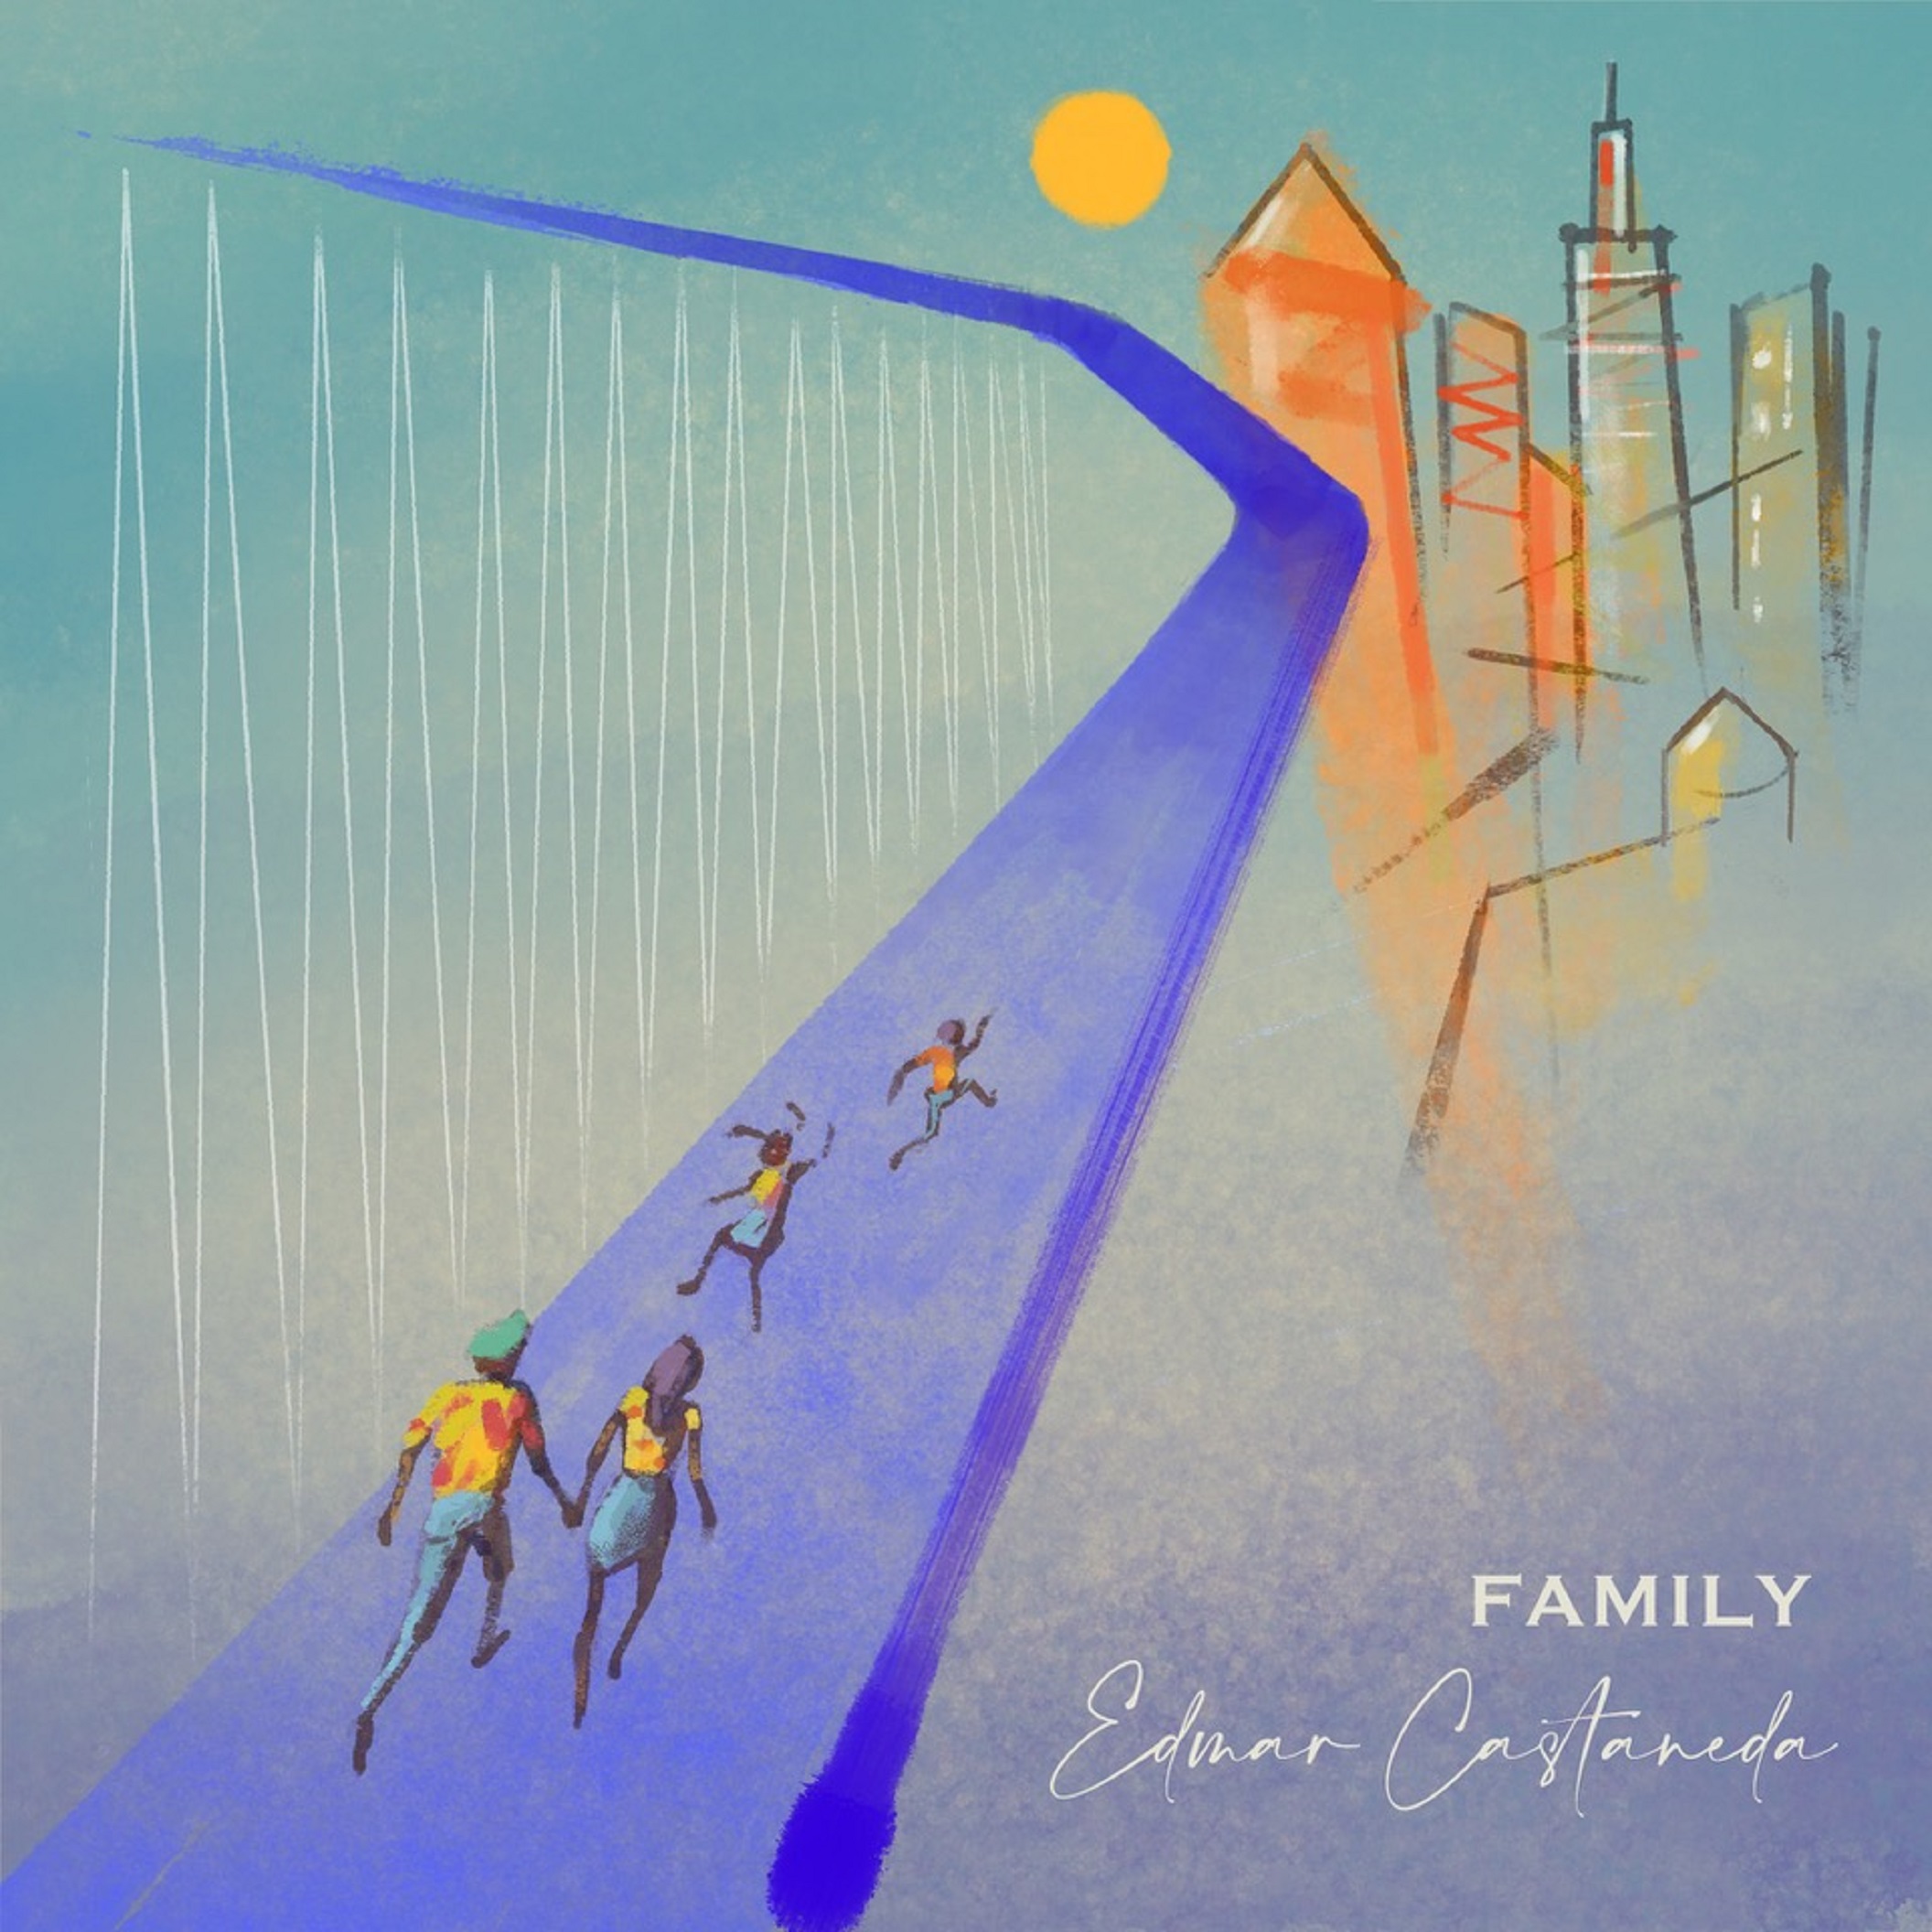 Jazz Harpist Edmar Castañeda Releases New Album "Family" on May 21